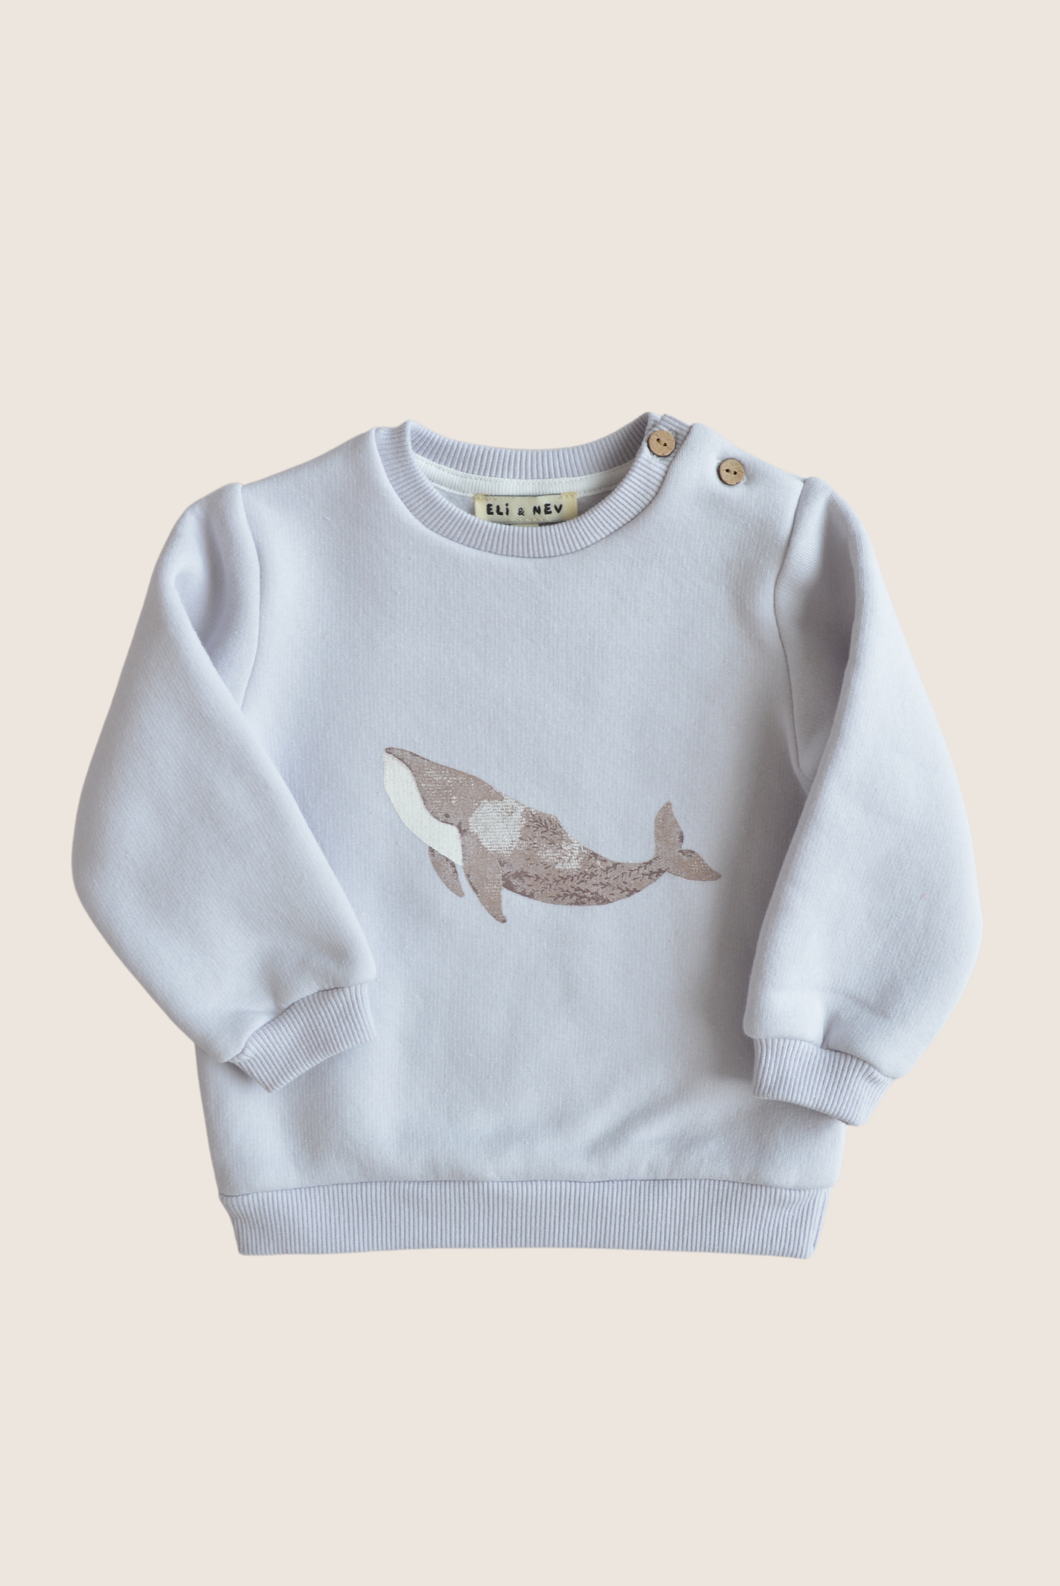 Baby / kids sweatshirt - whale print